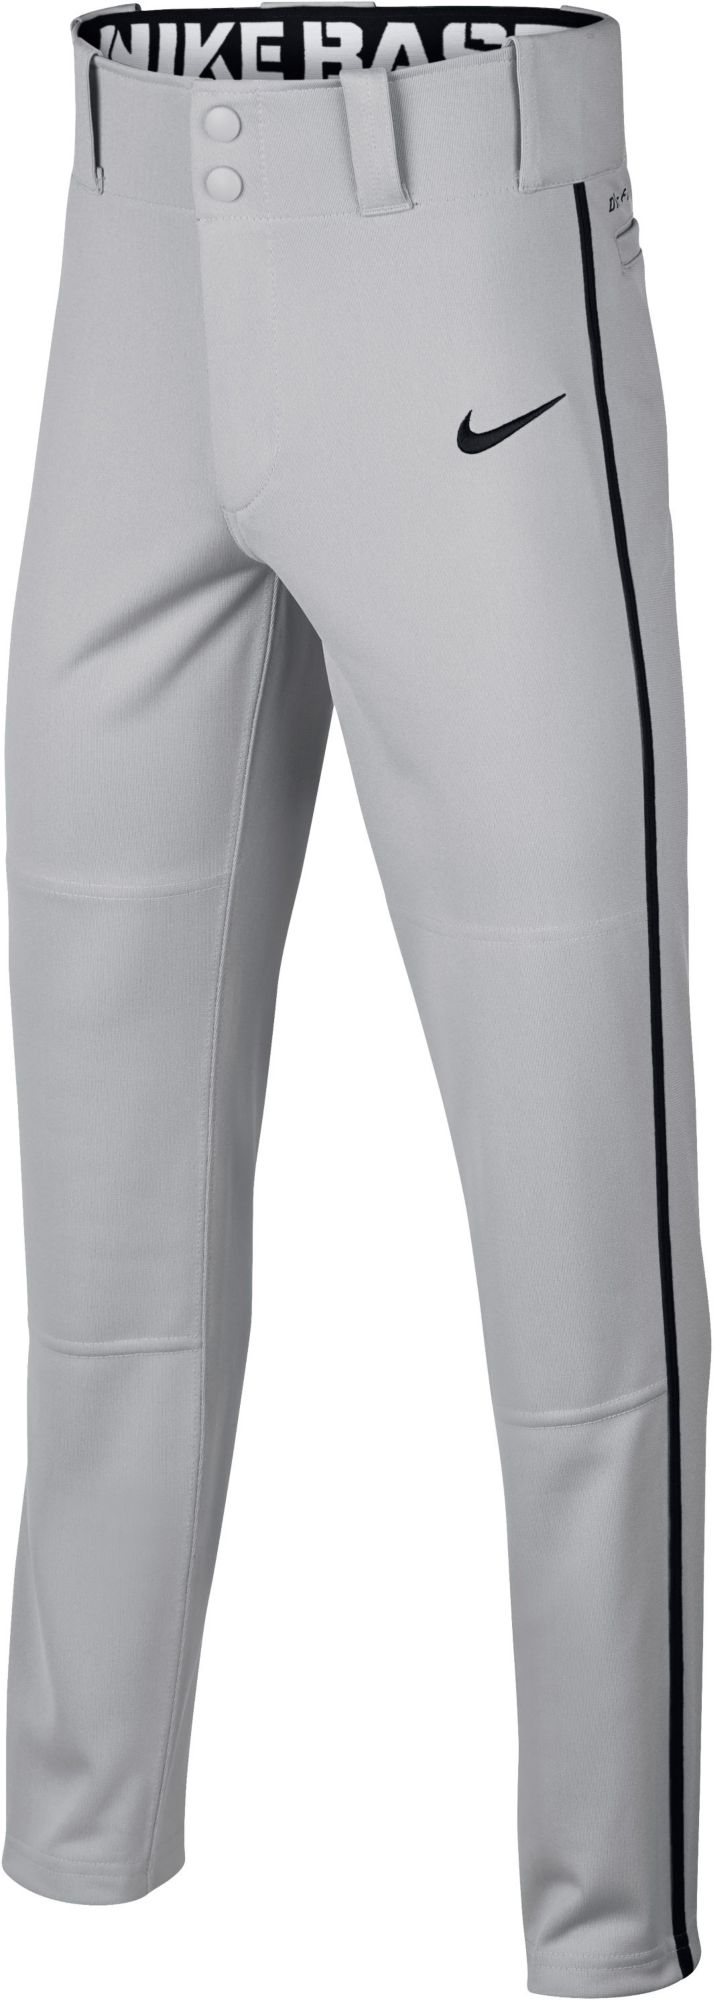 Nike Swoosh \u0026 Swingman Pants | Curbside 